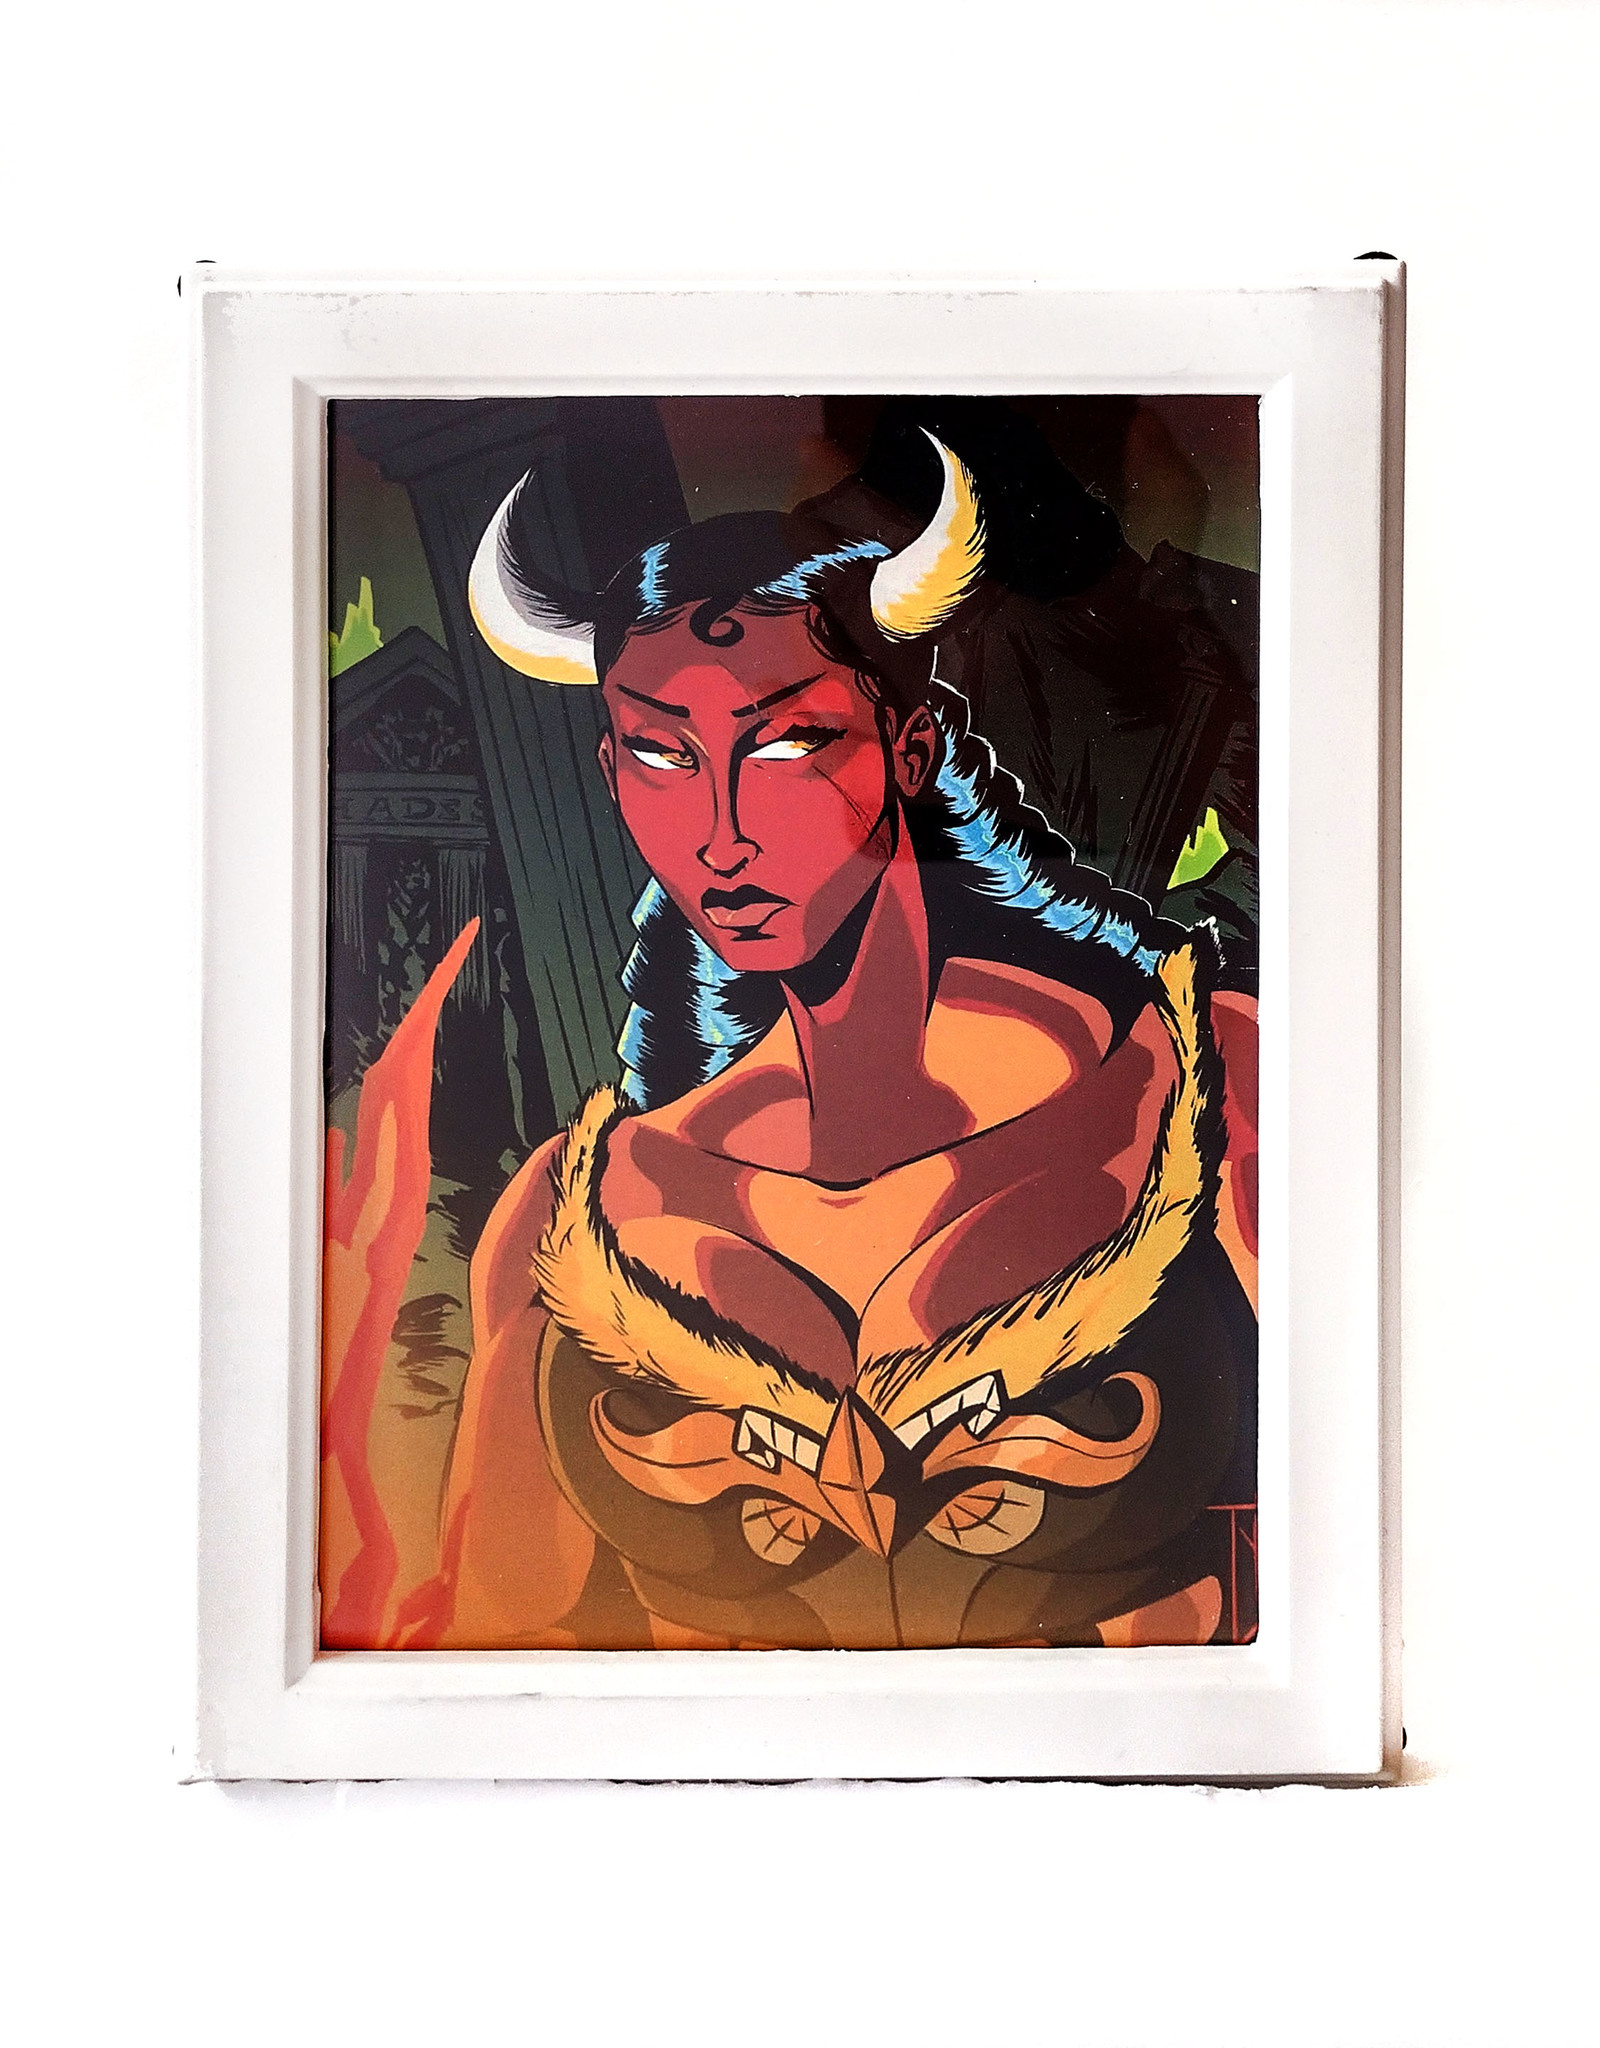 TitanX "MINOTAUR GODDESS" framed digital print by TitanX